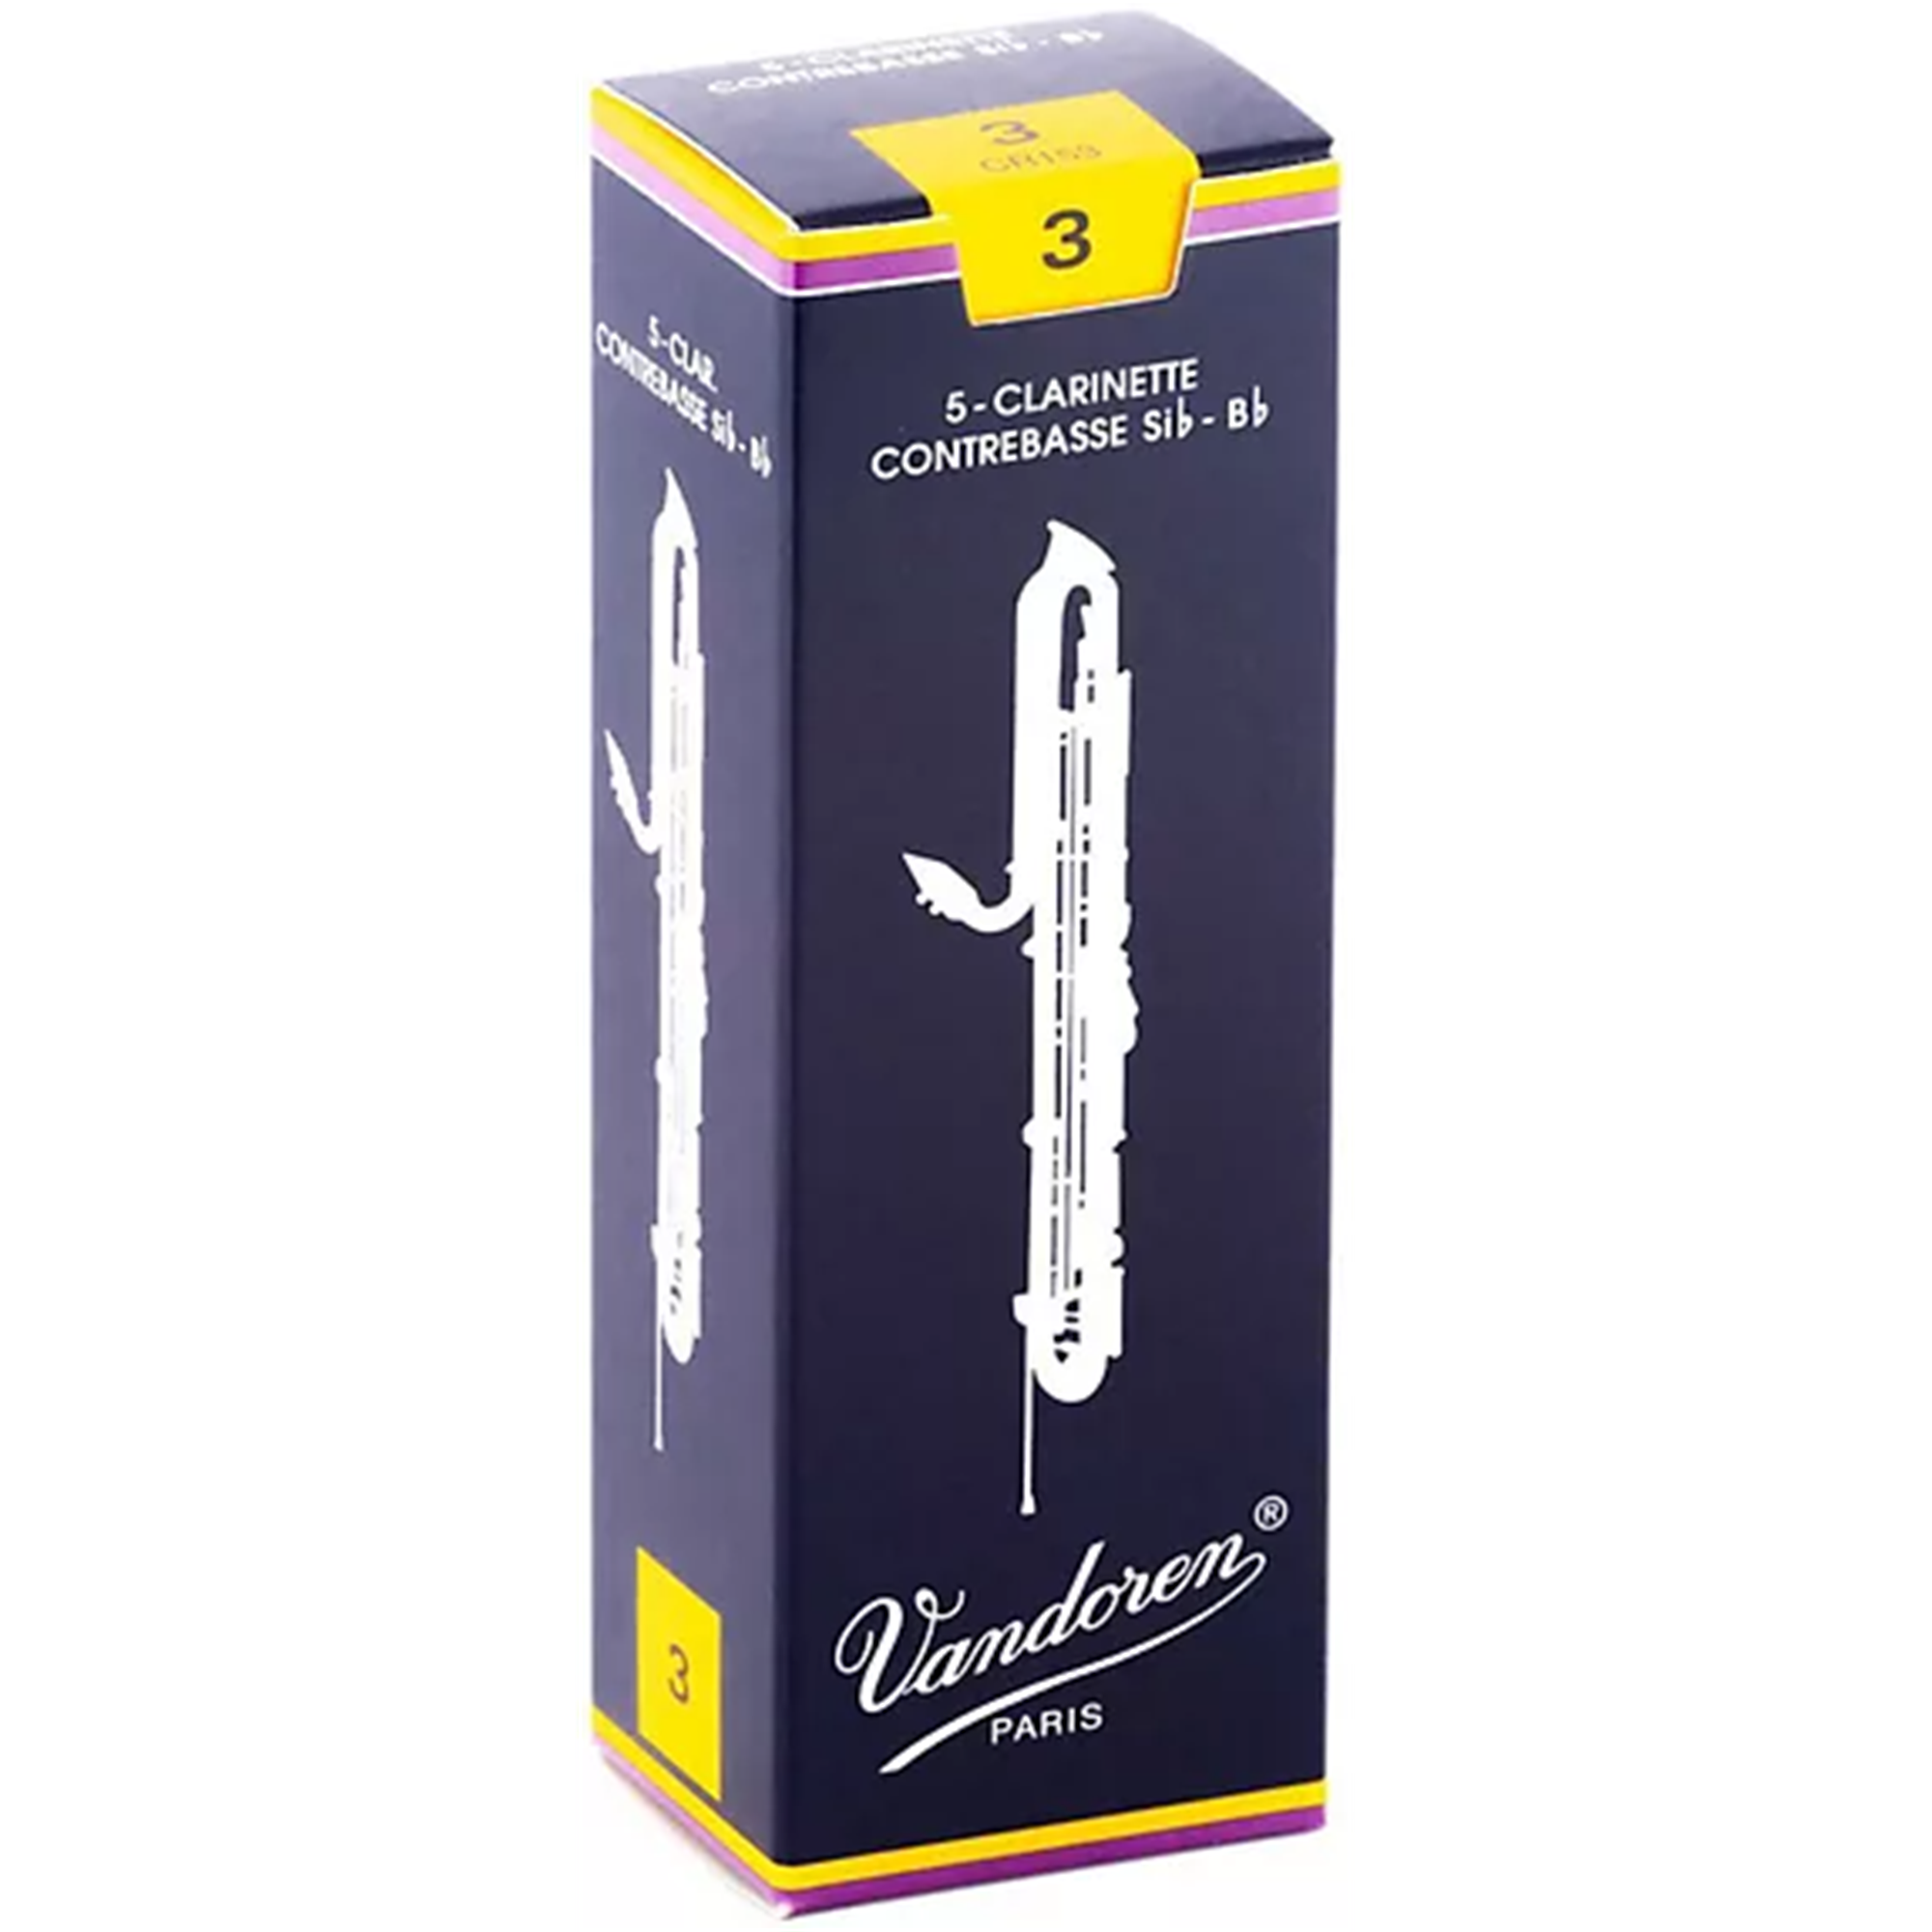 VANDOREN CR153 #3 Contra Bass Clarinet Reeds, Box of 5